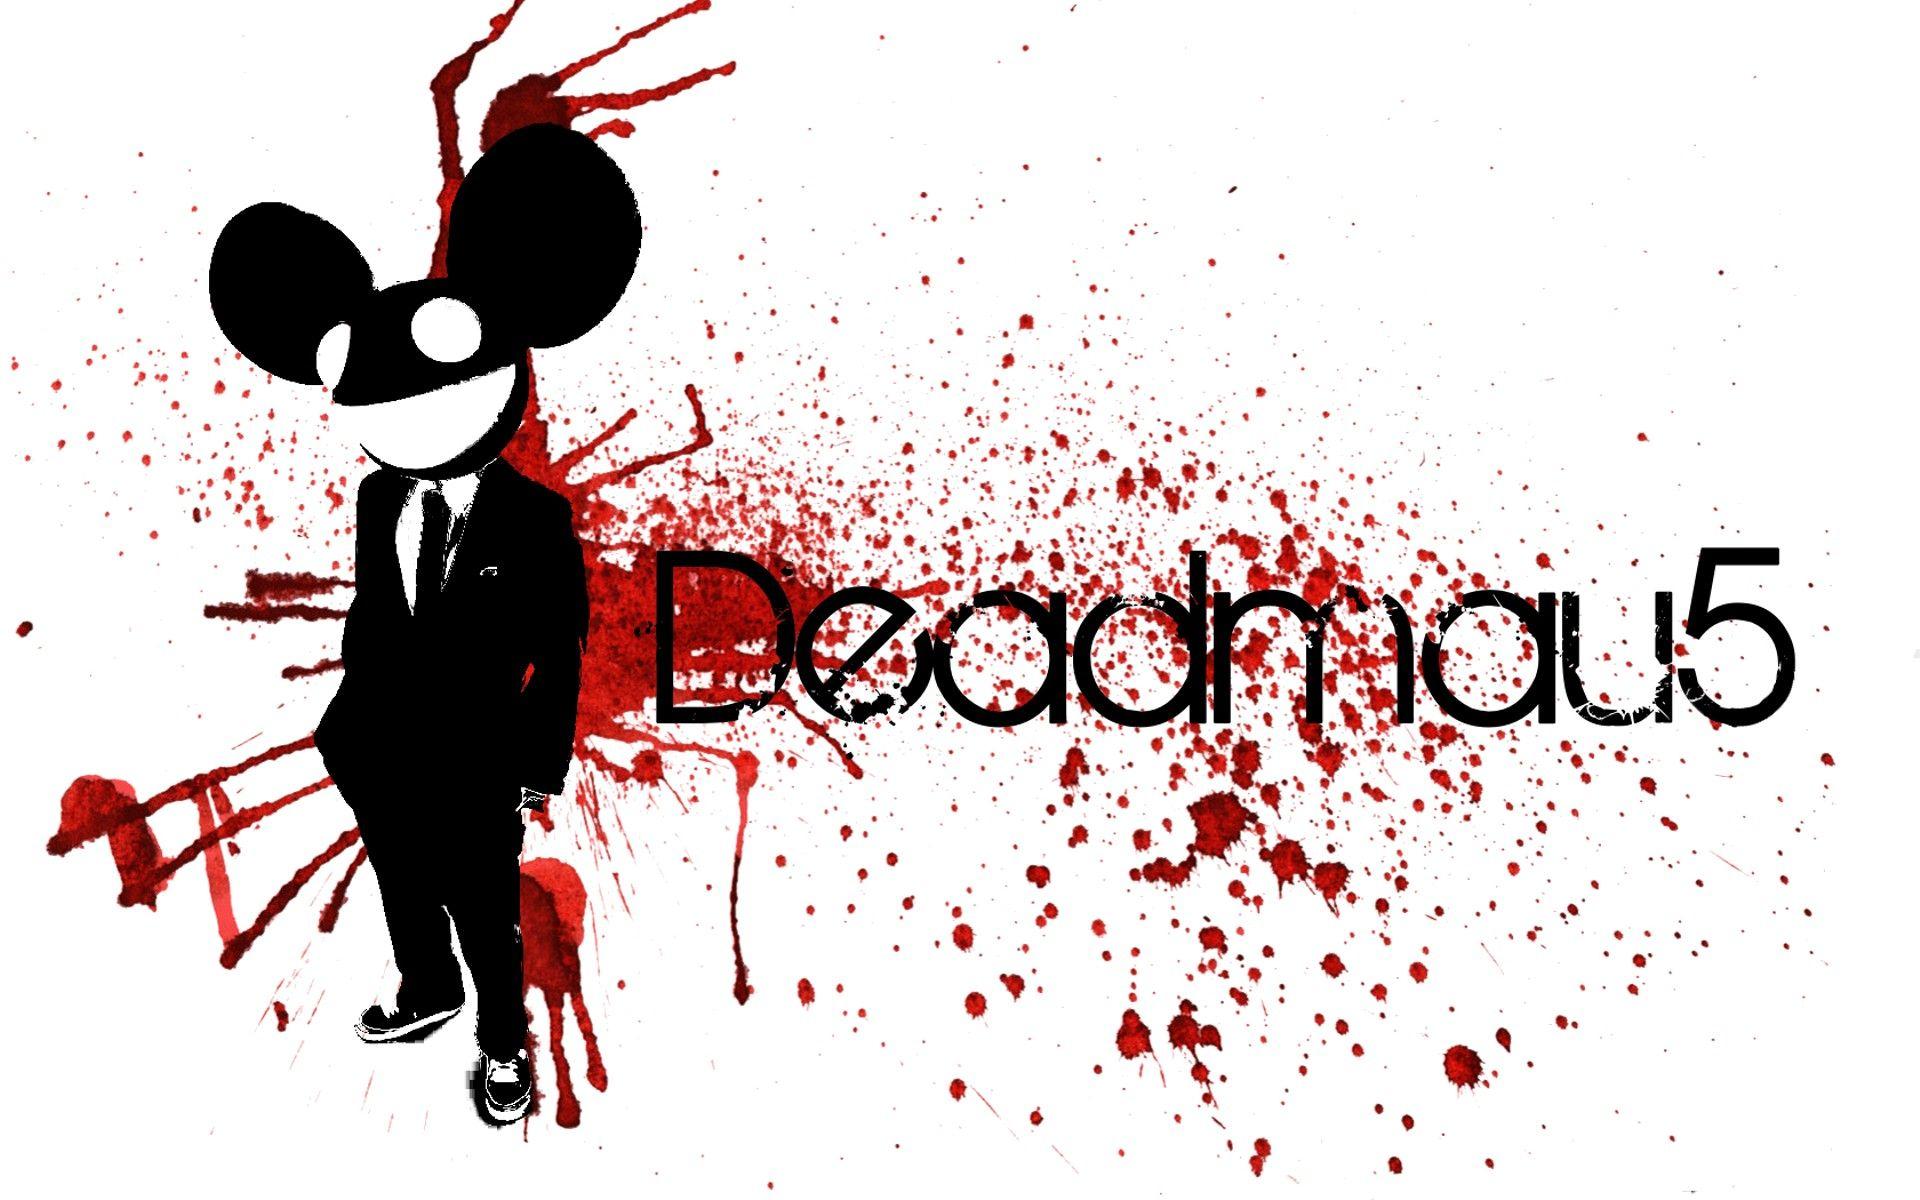 Mickey Mouse Deadmau5 wallpaper